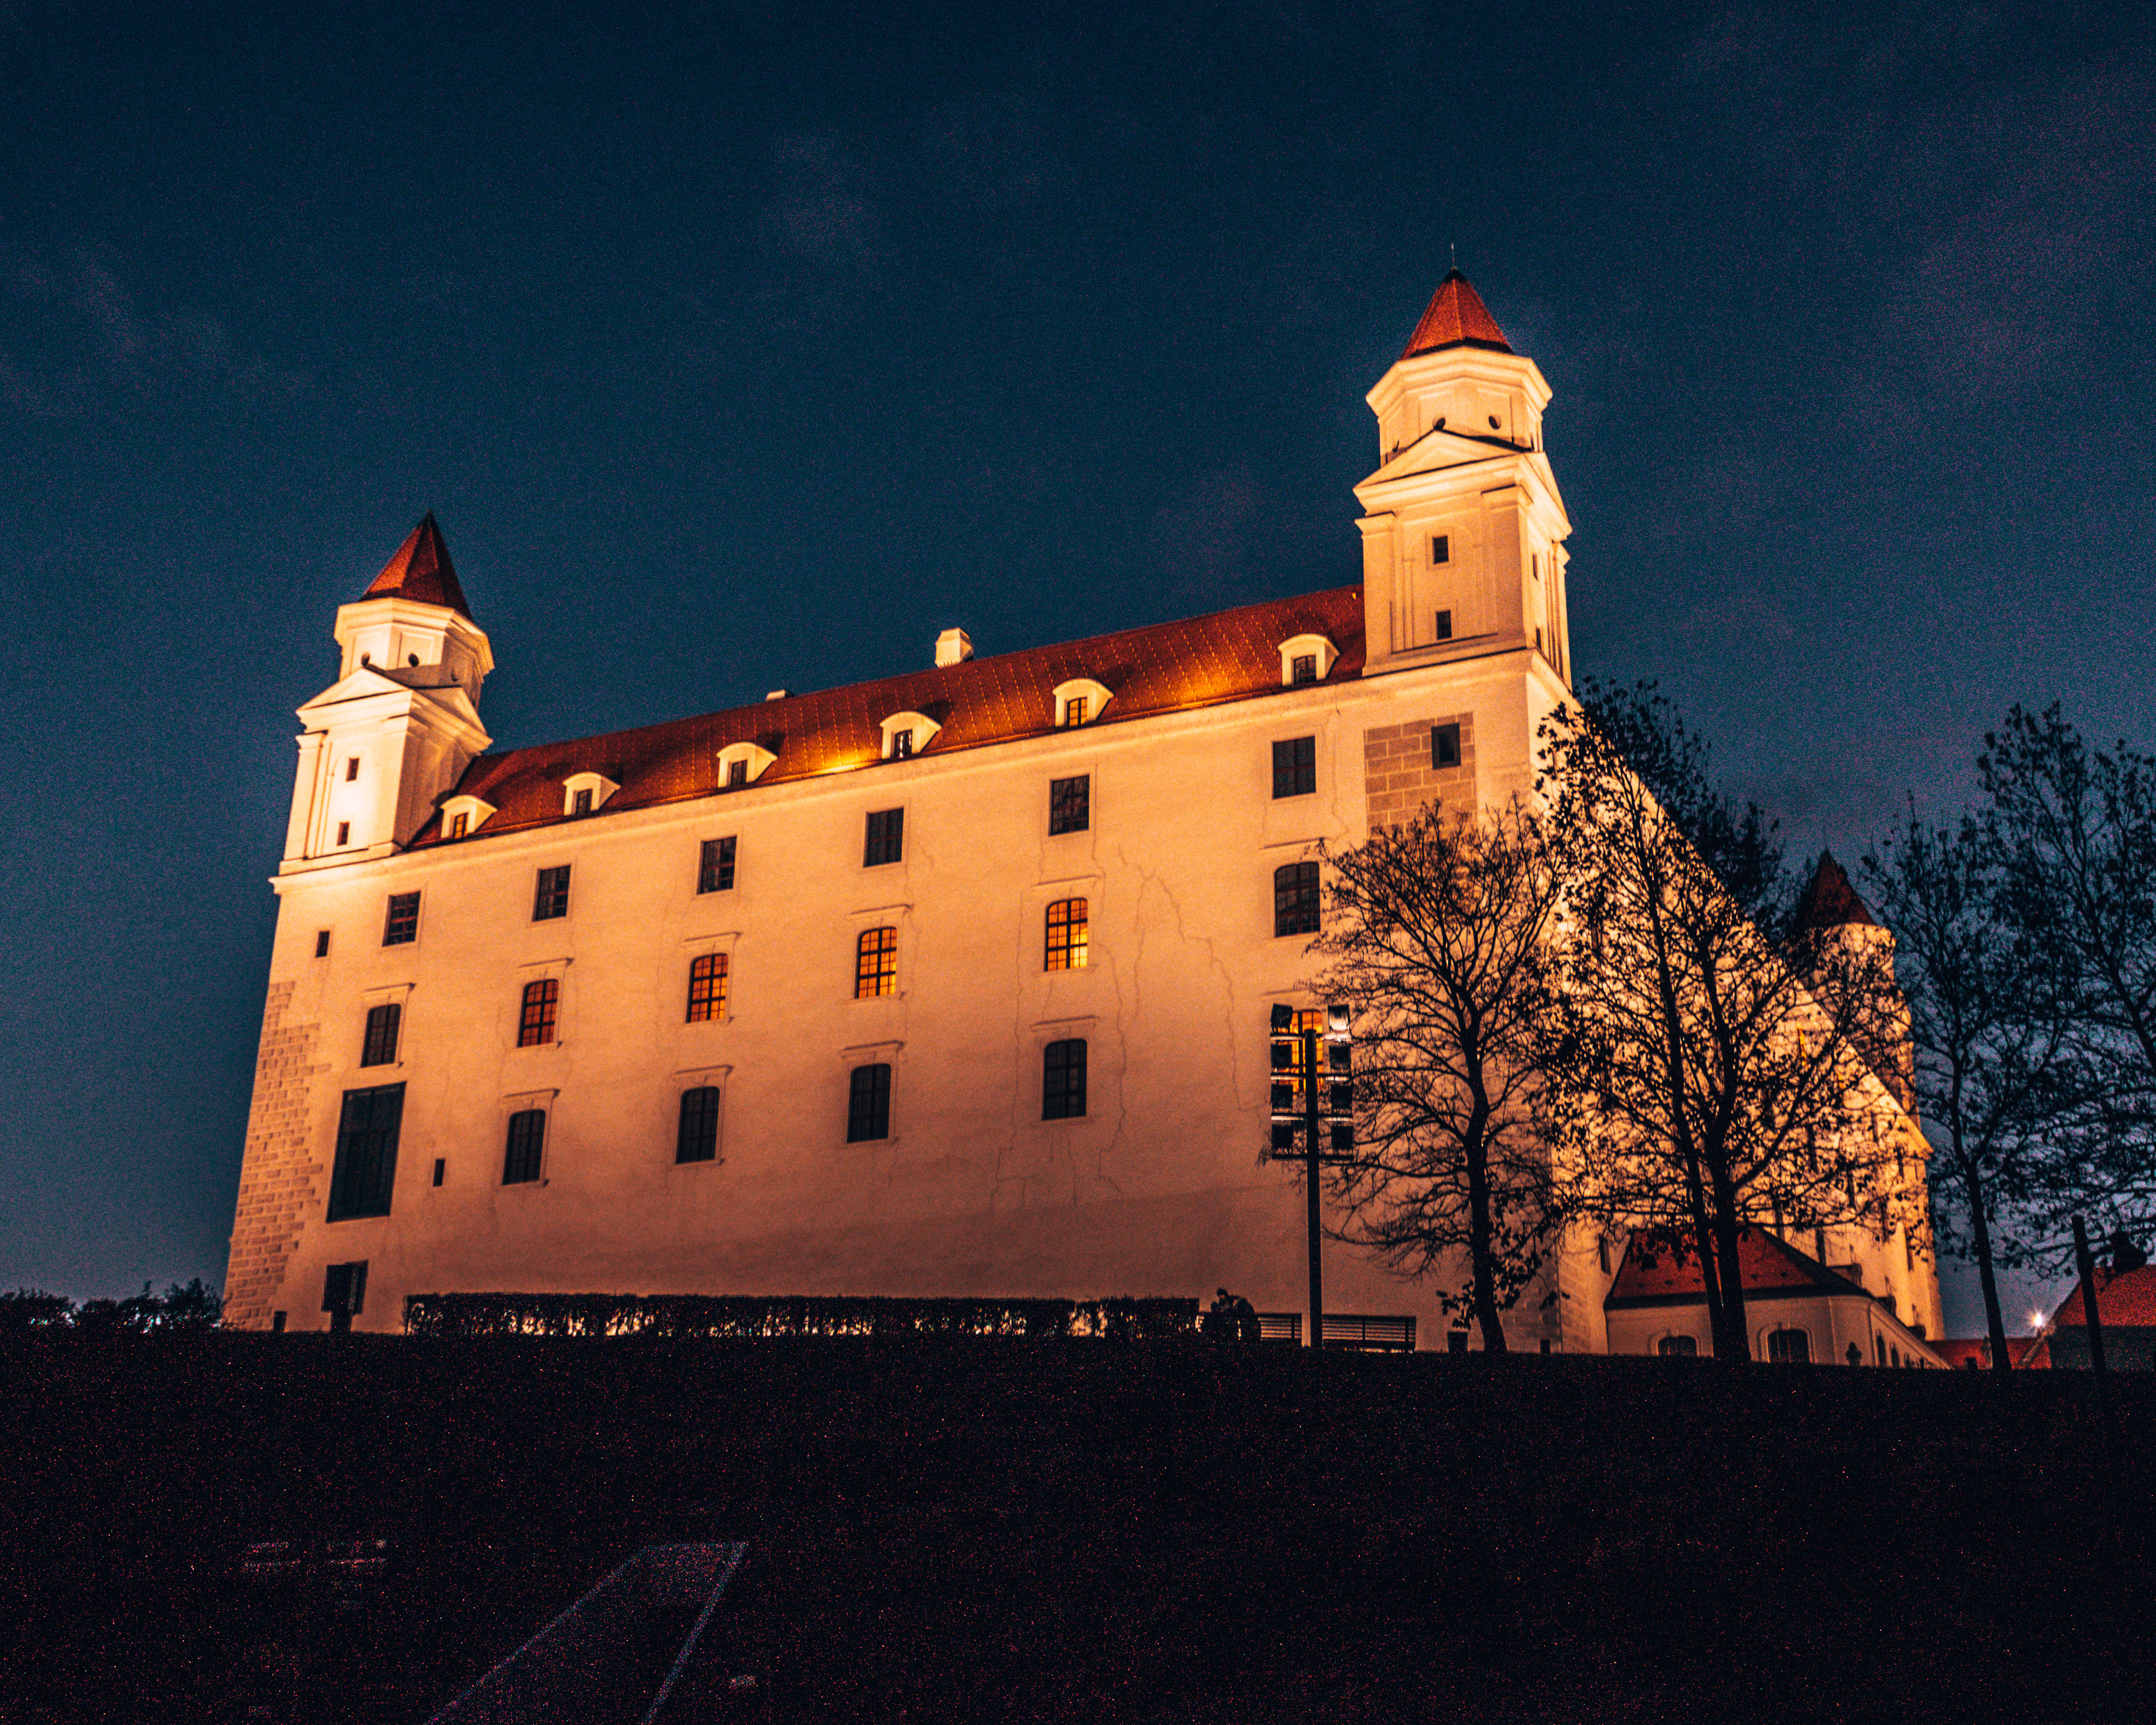 Beautiful night shot of the Bratislava Castle in Bratislava, Slovakia